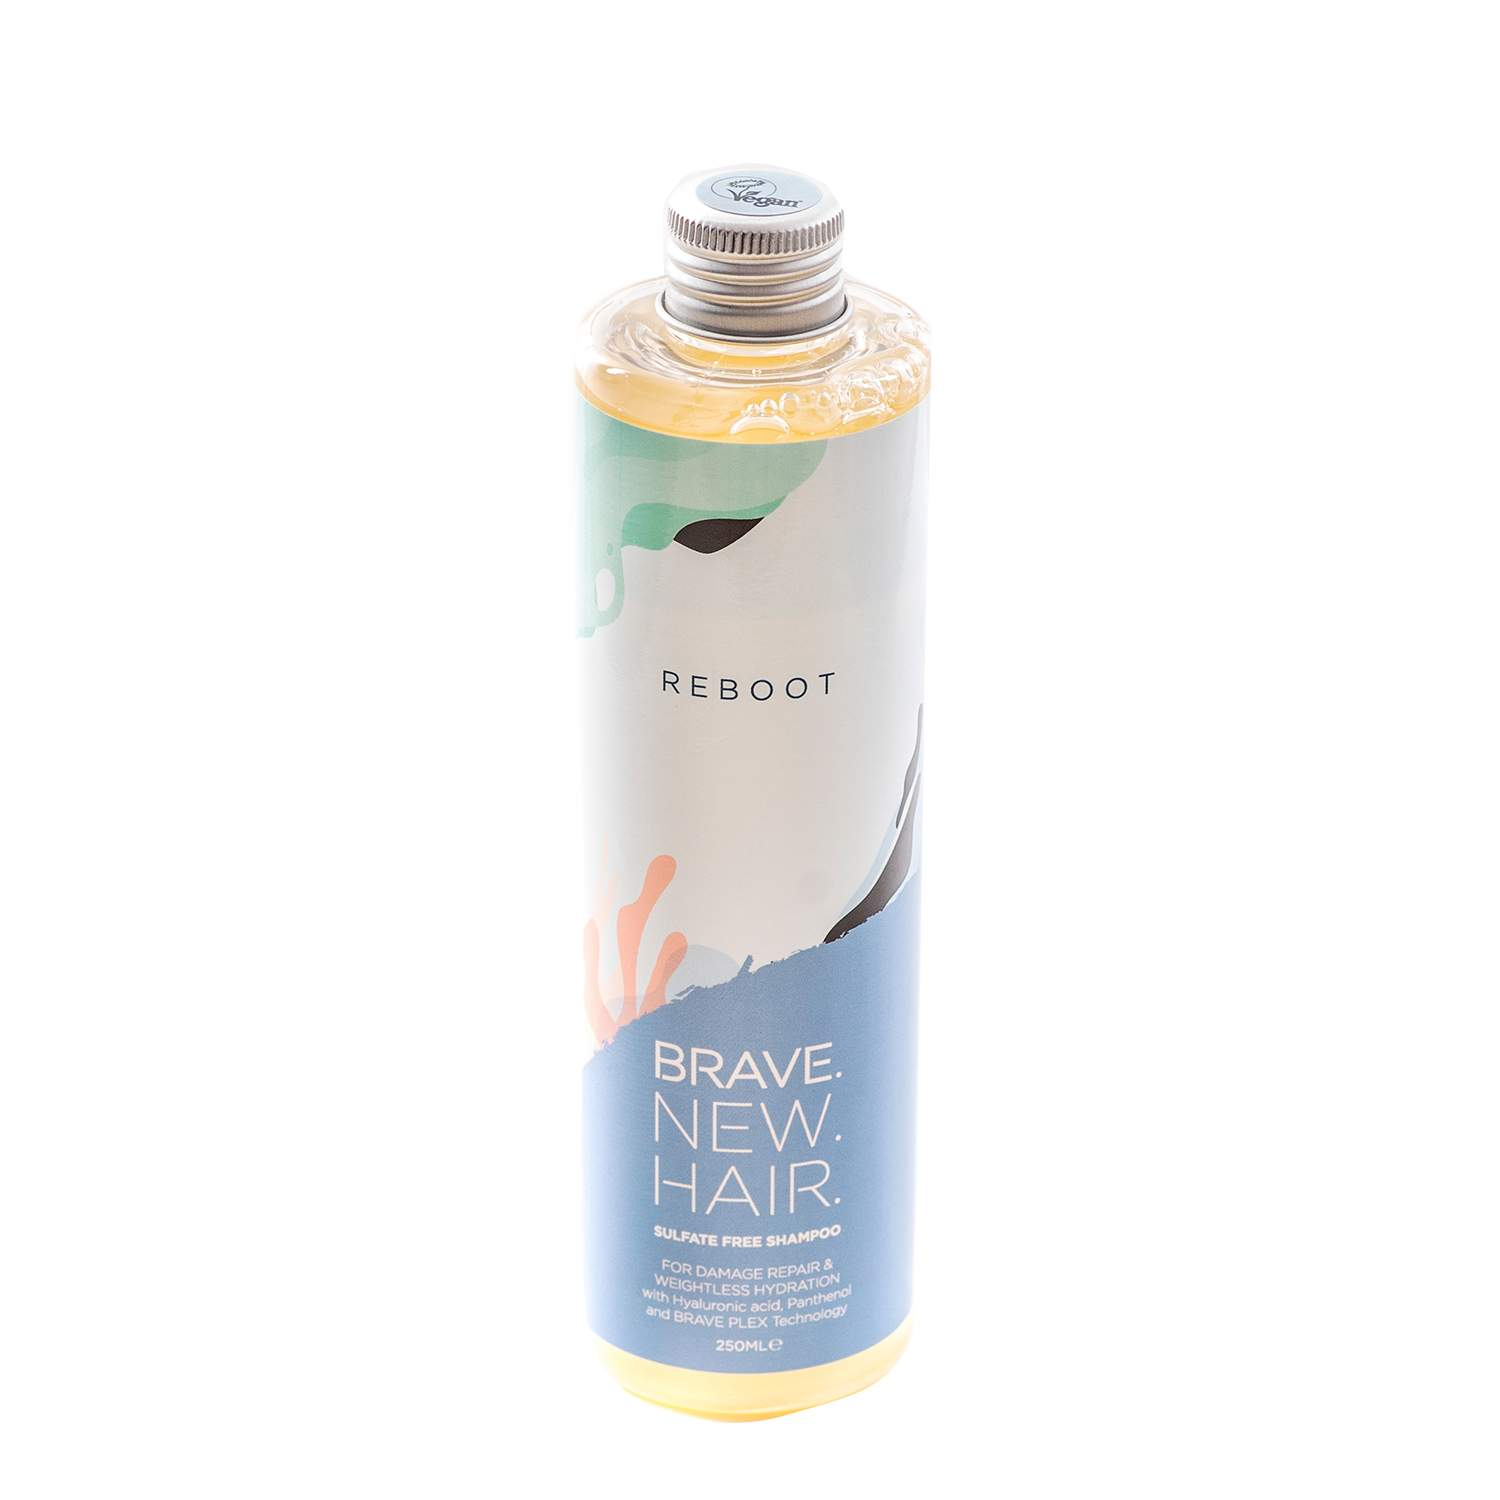 Brave.New.Hair Reboot Shampoo